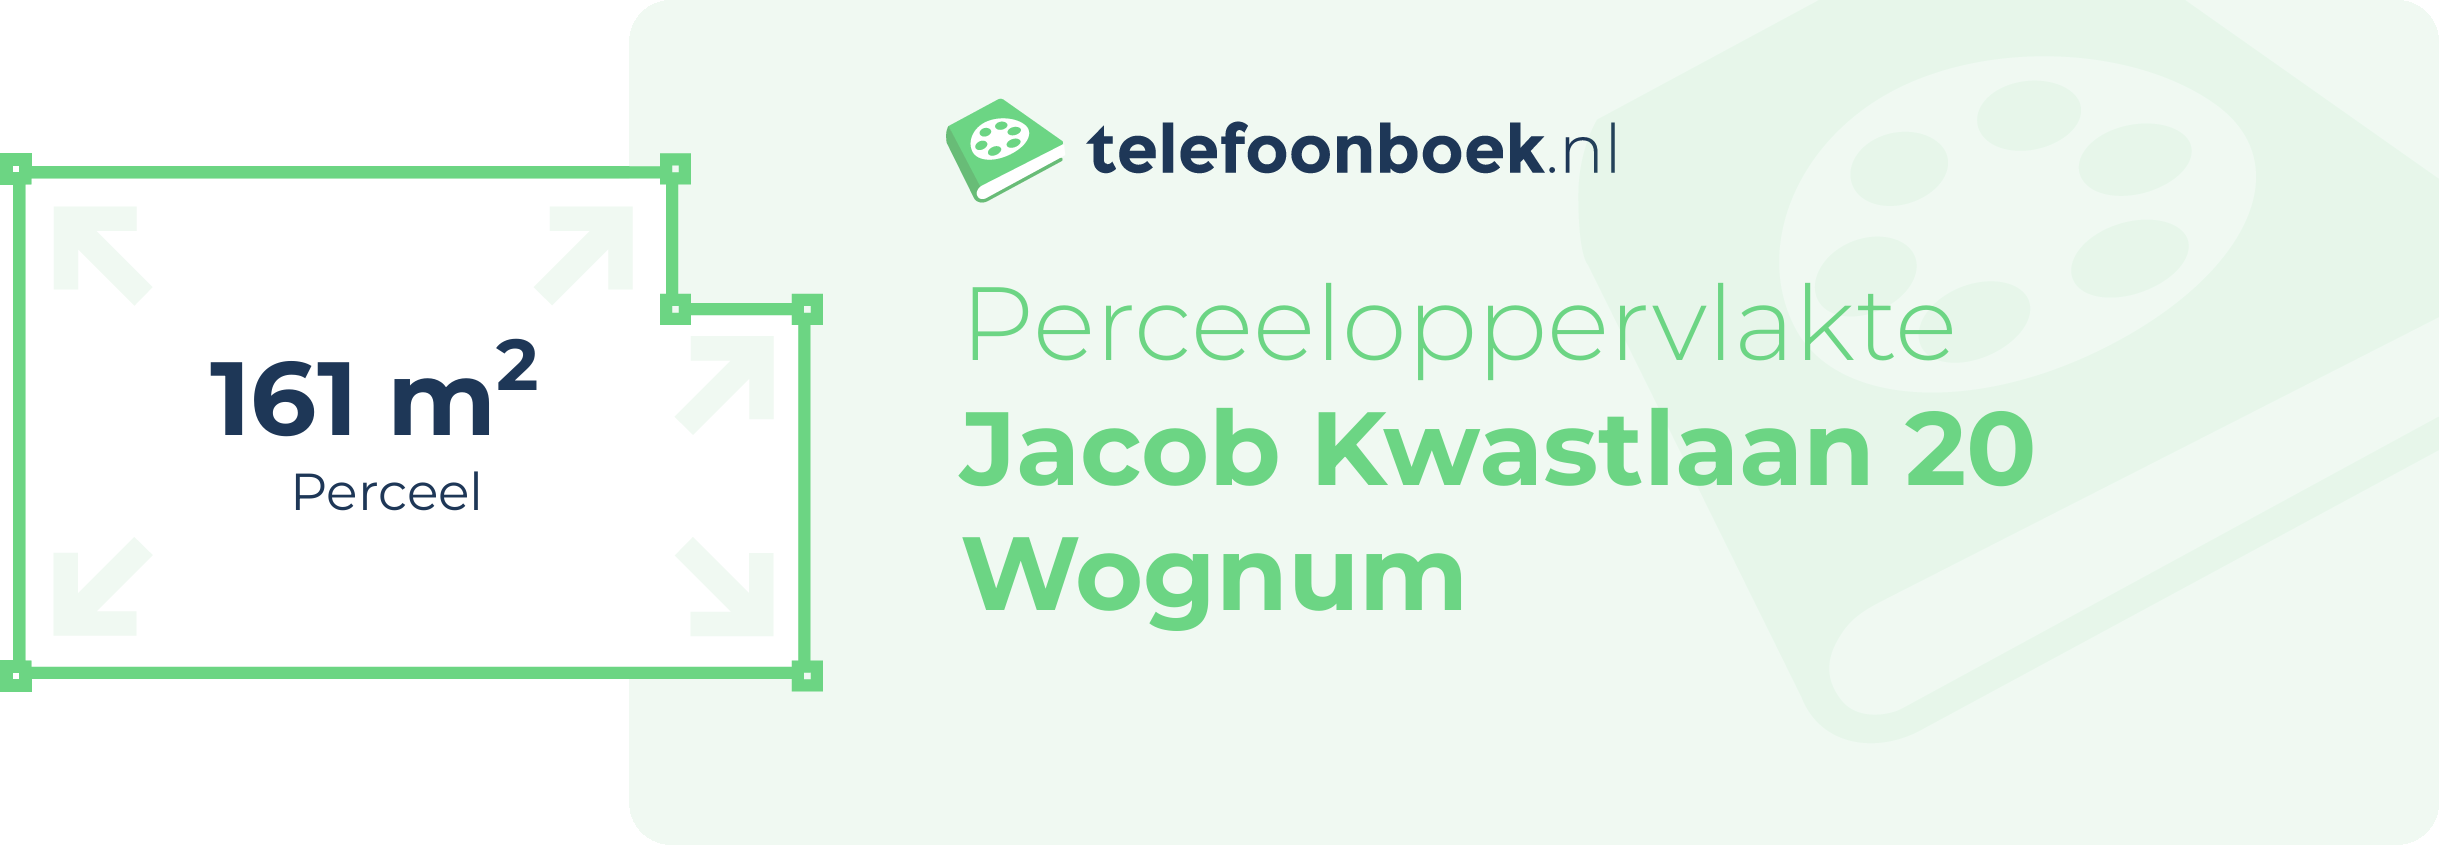 Perceeloppervlakte Jacob Kwastlaan 20 Wognum